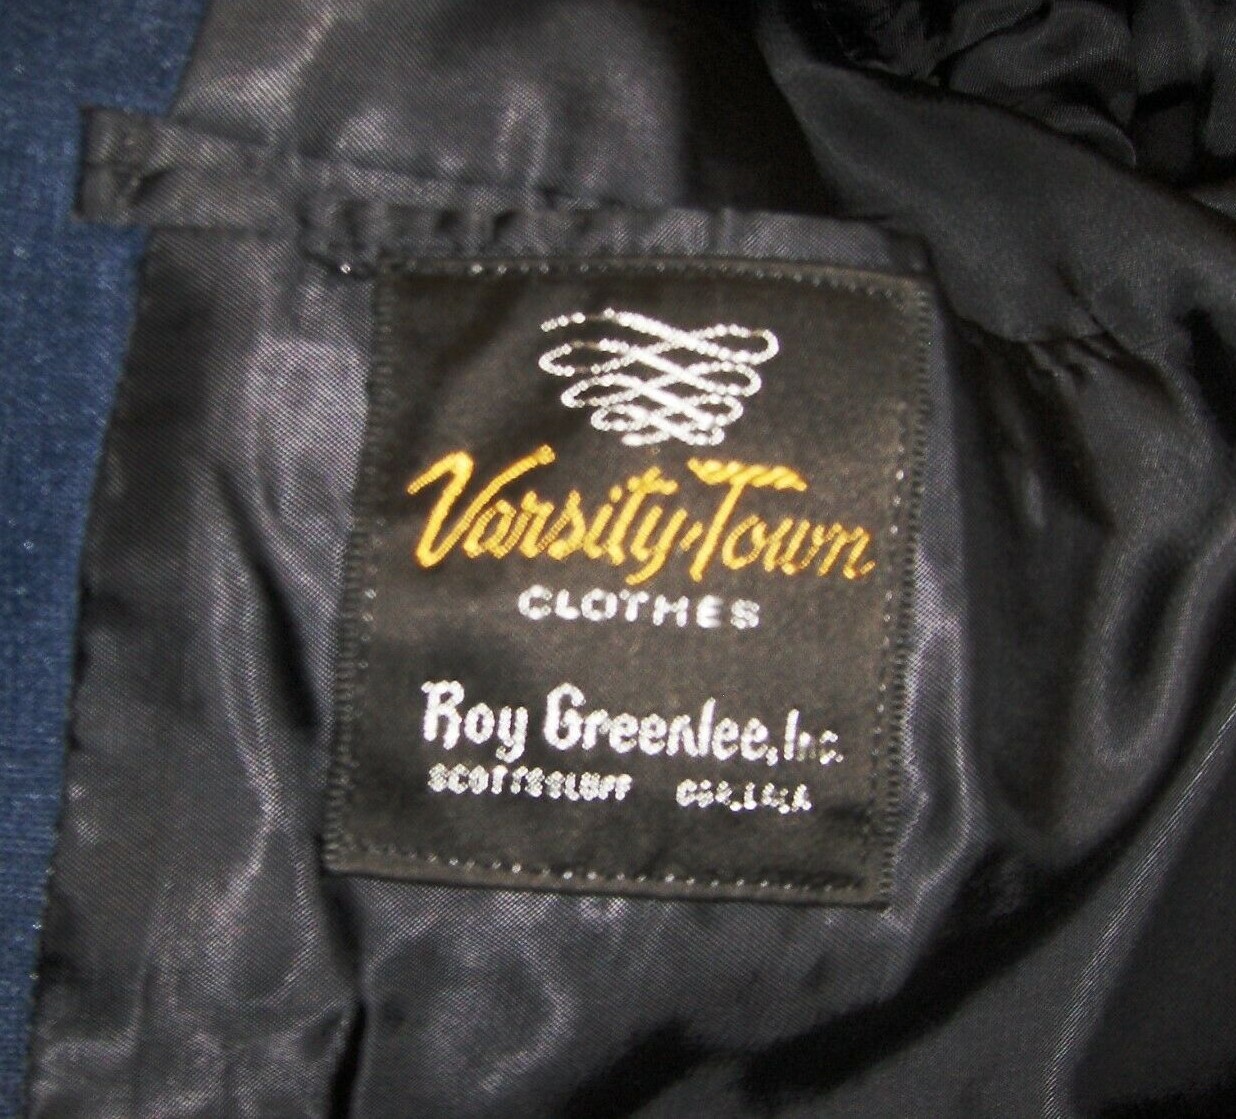 Roy Greenlee Varsity Town Clothes Label.jpg